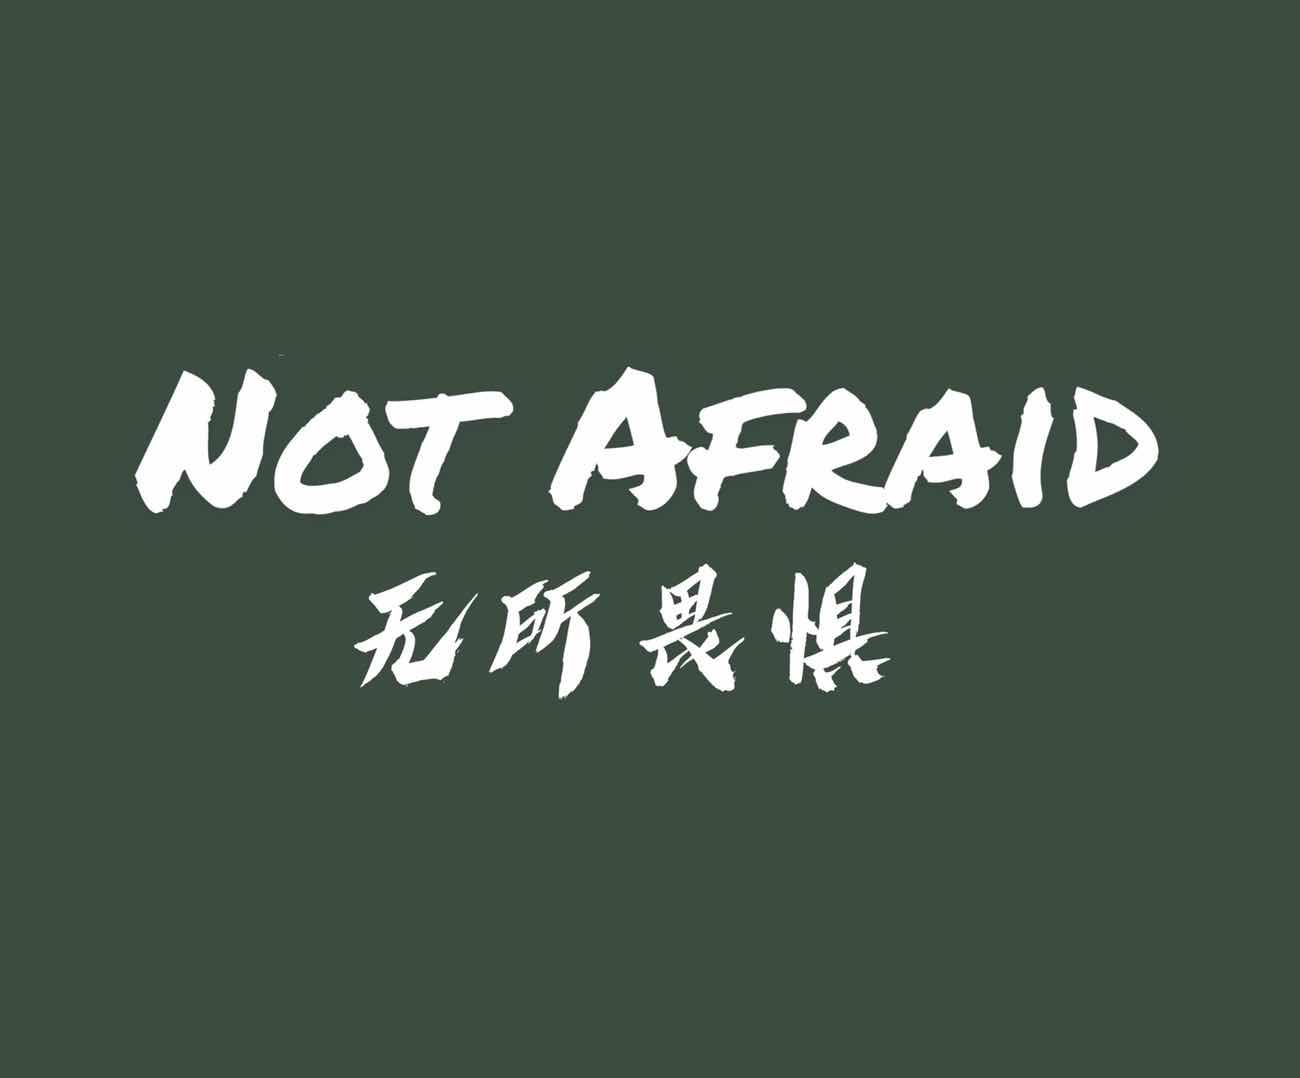 Not Afraid